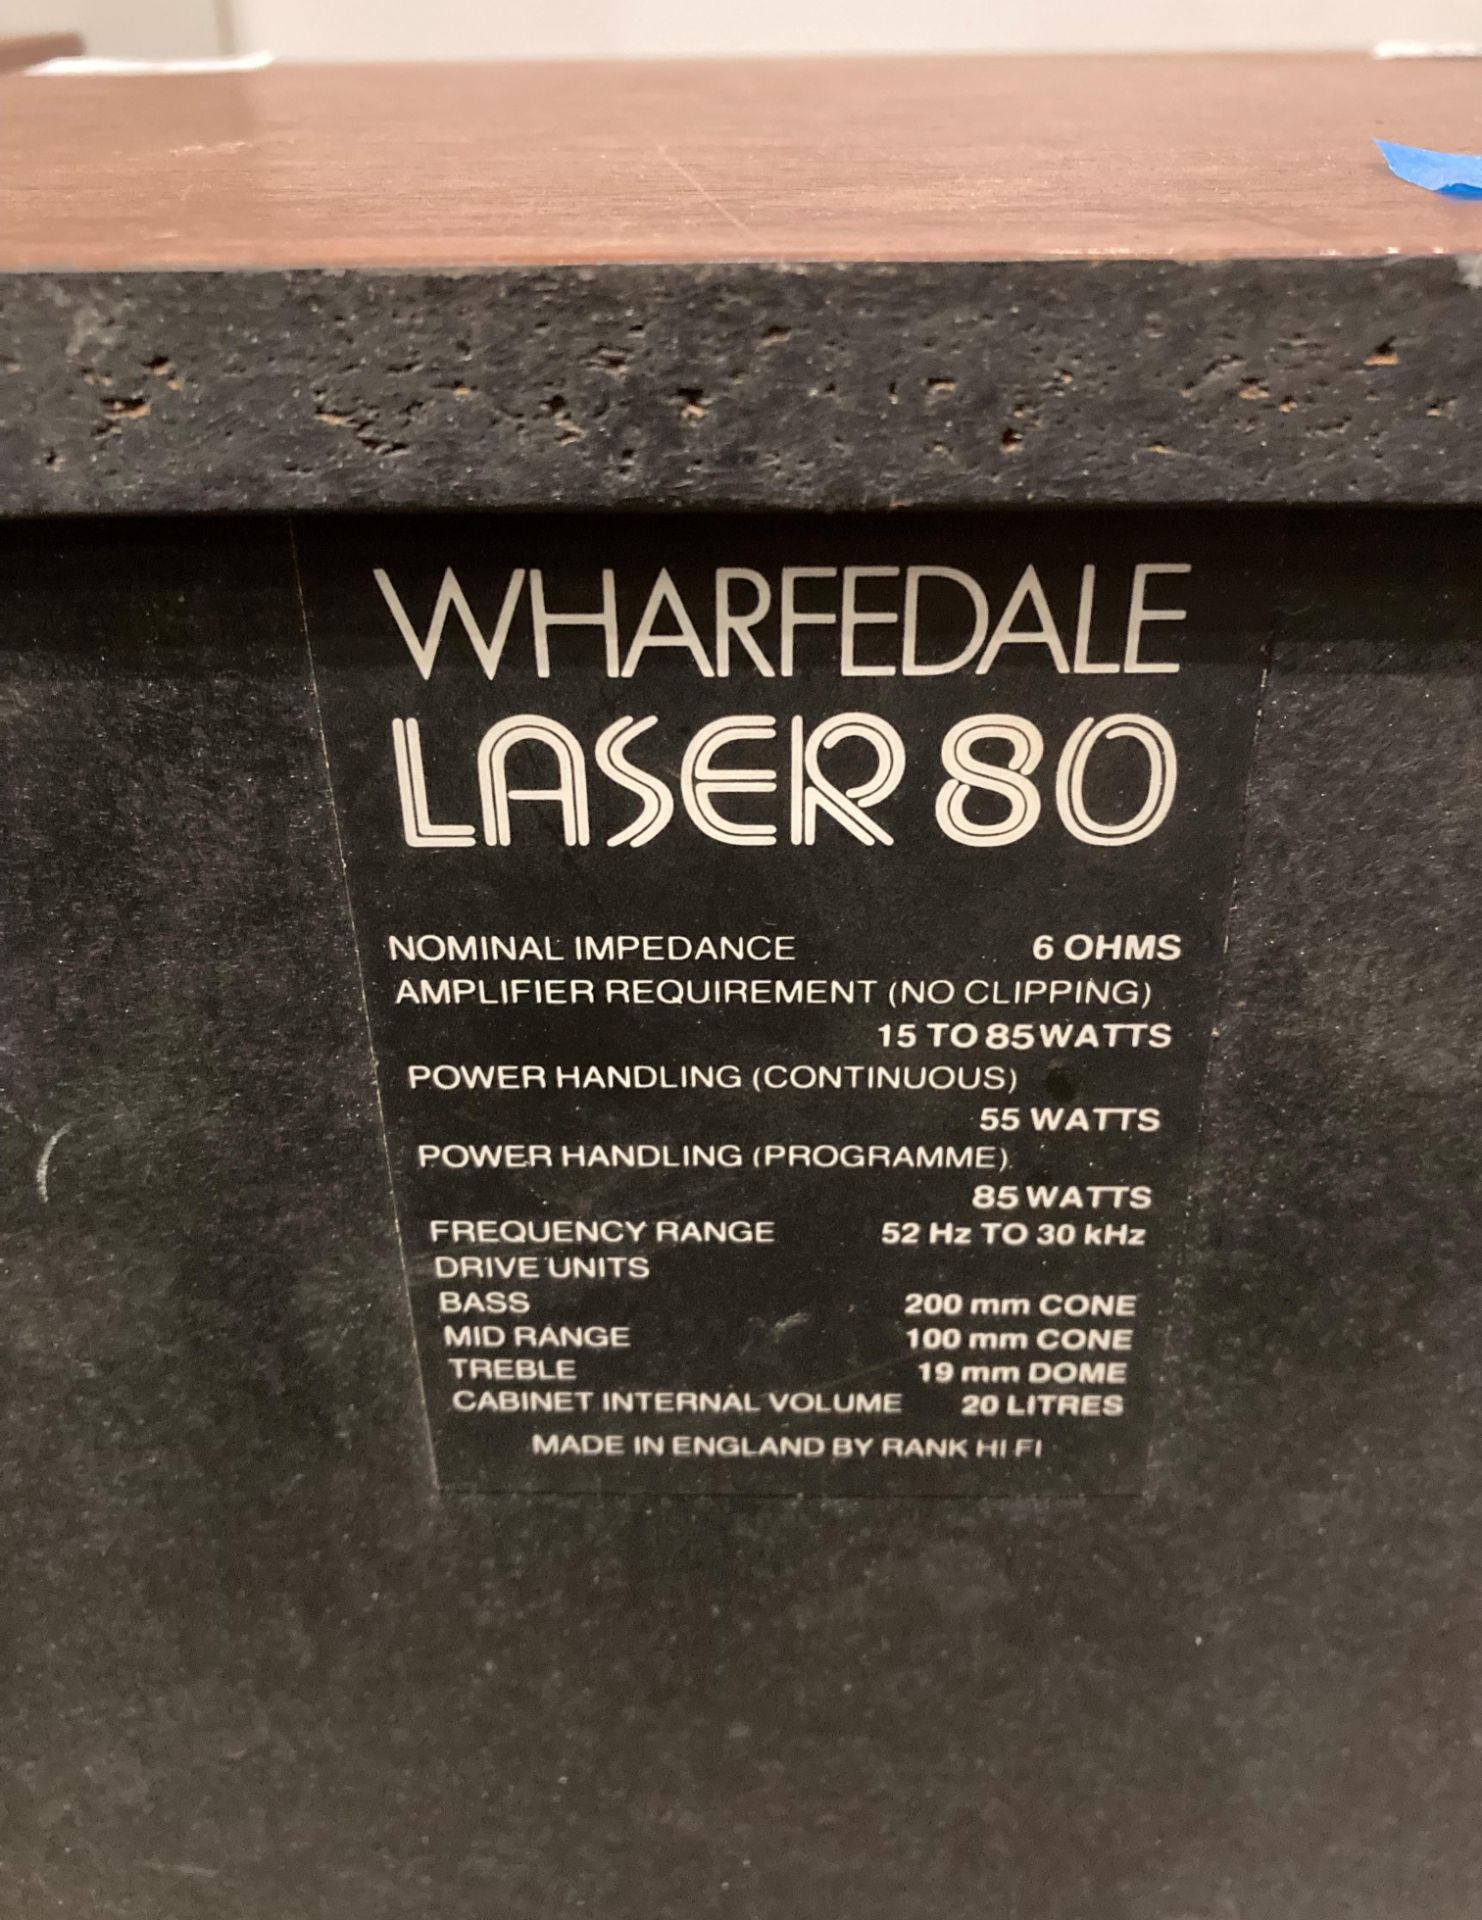 Pair of Wharfdale Laser 80 speakers 1970s/1980s - 47cm high (Saleroom location: S3 T3) - Image 3 of 3